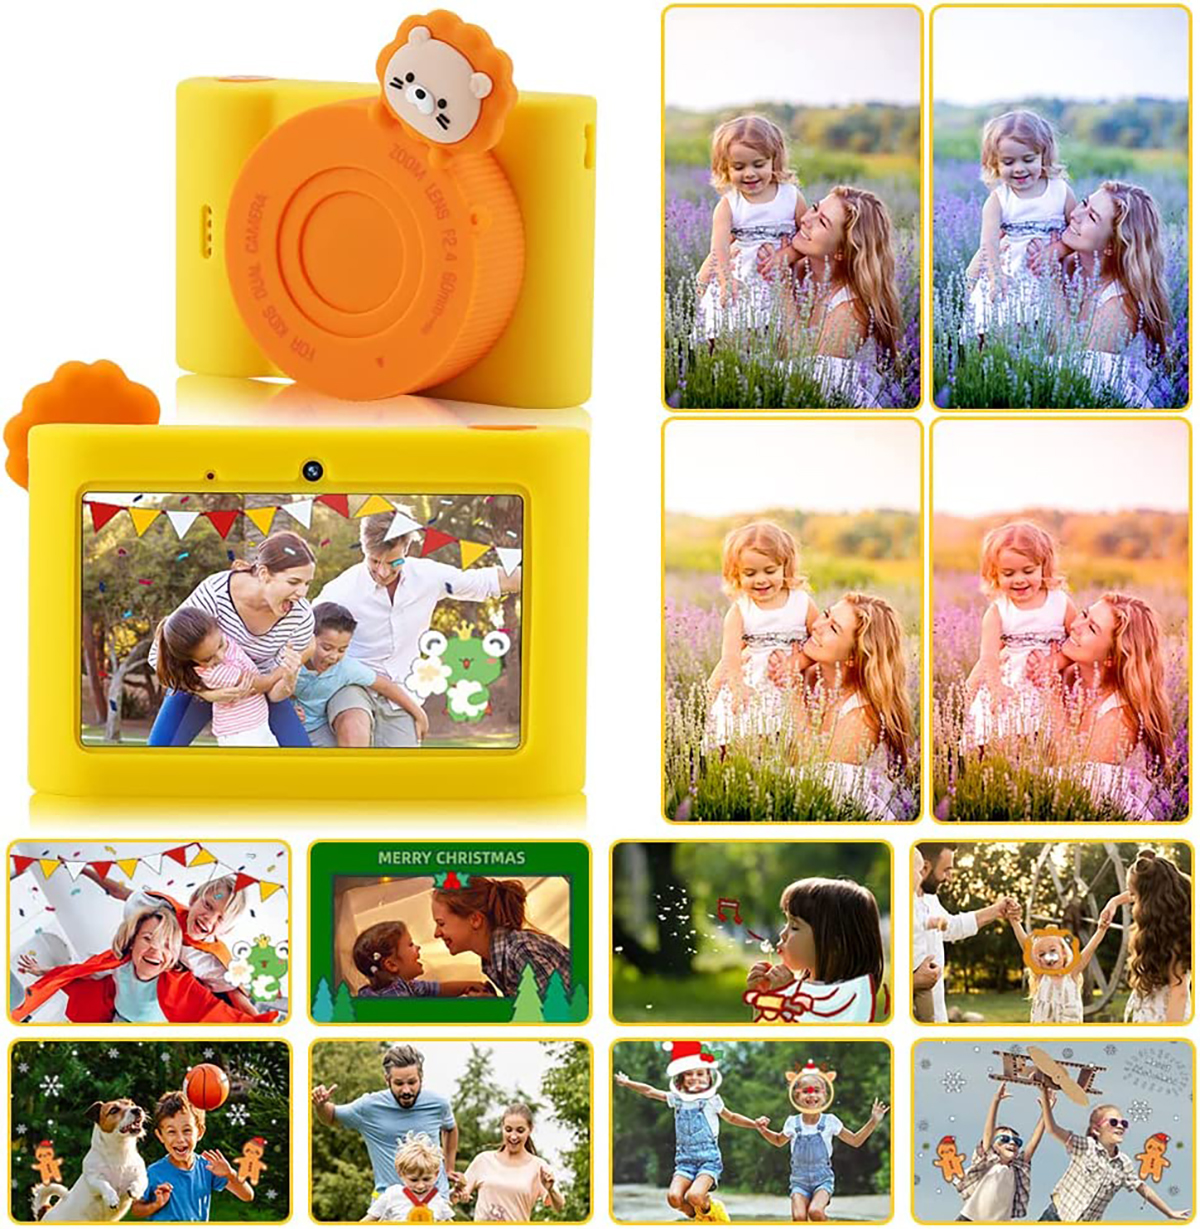 Kinderkamera SD-Karte FINE DigitalKamera Gelb- Fotokamera,32GB PRO Kinderkamera,48MP,1080P,WiFi LIFE